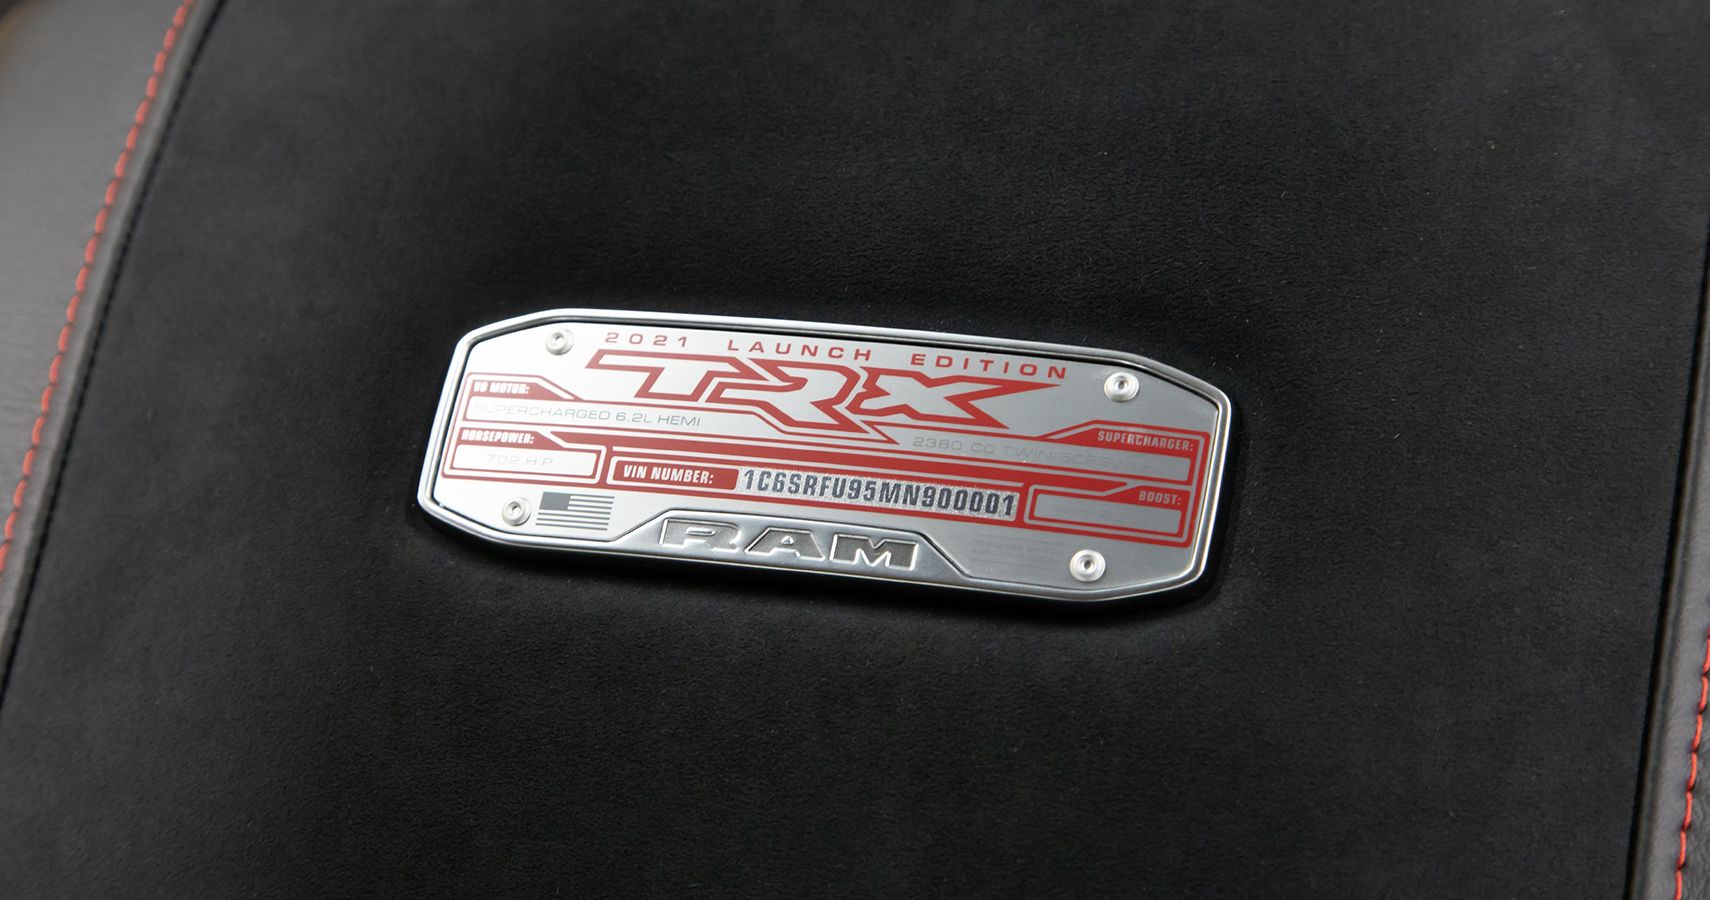 Ram 1500 TRX Launch Edition VIN 001 badge